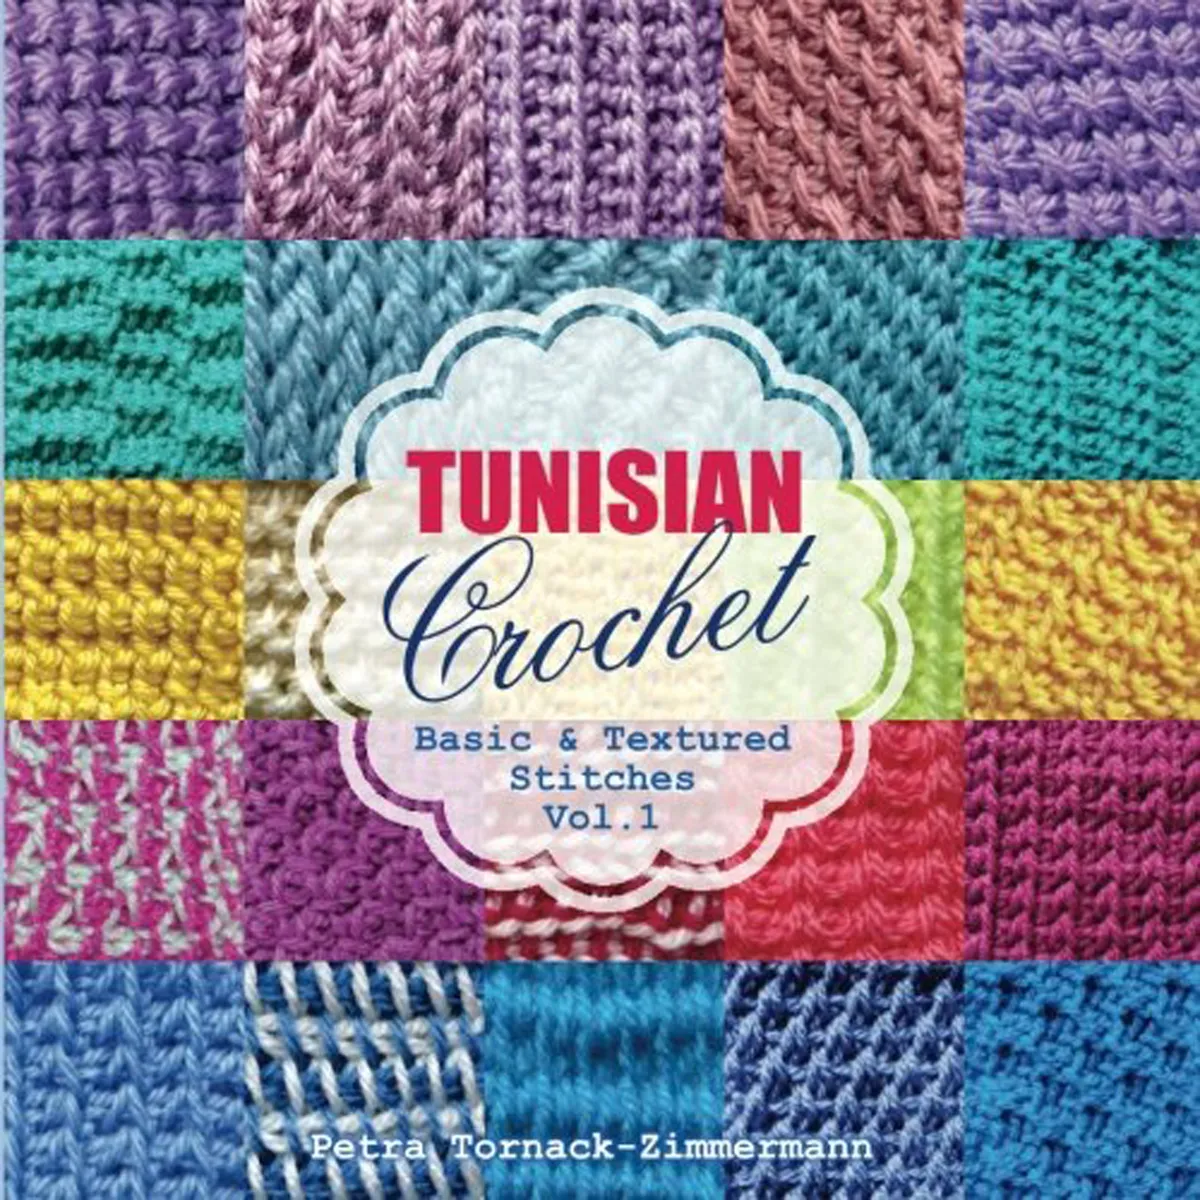 Tunisian_crochet_basic_stitches